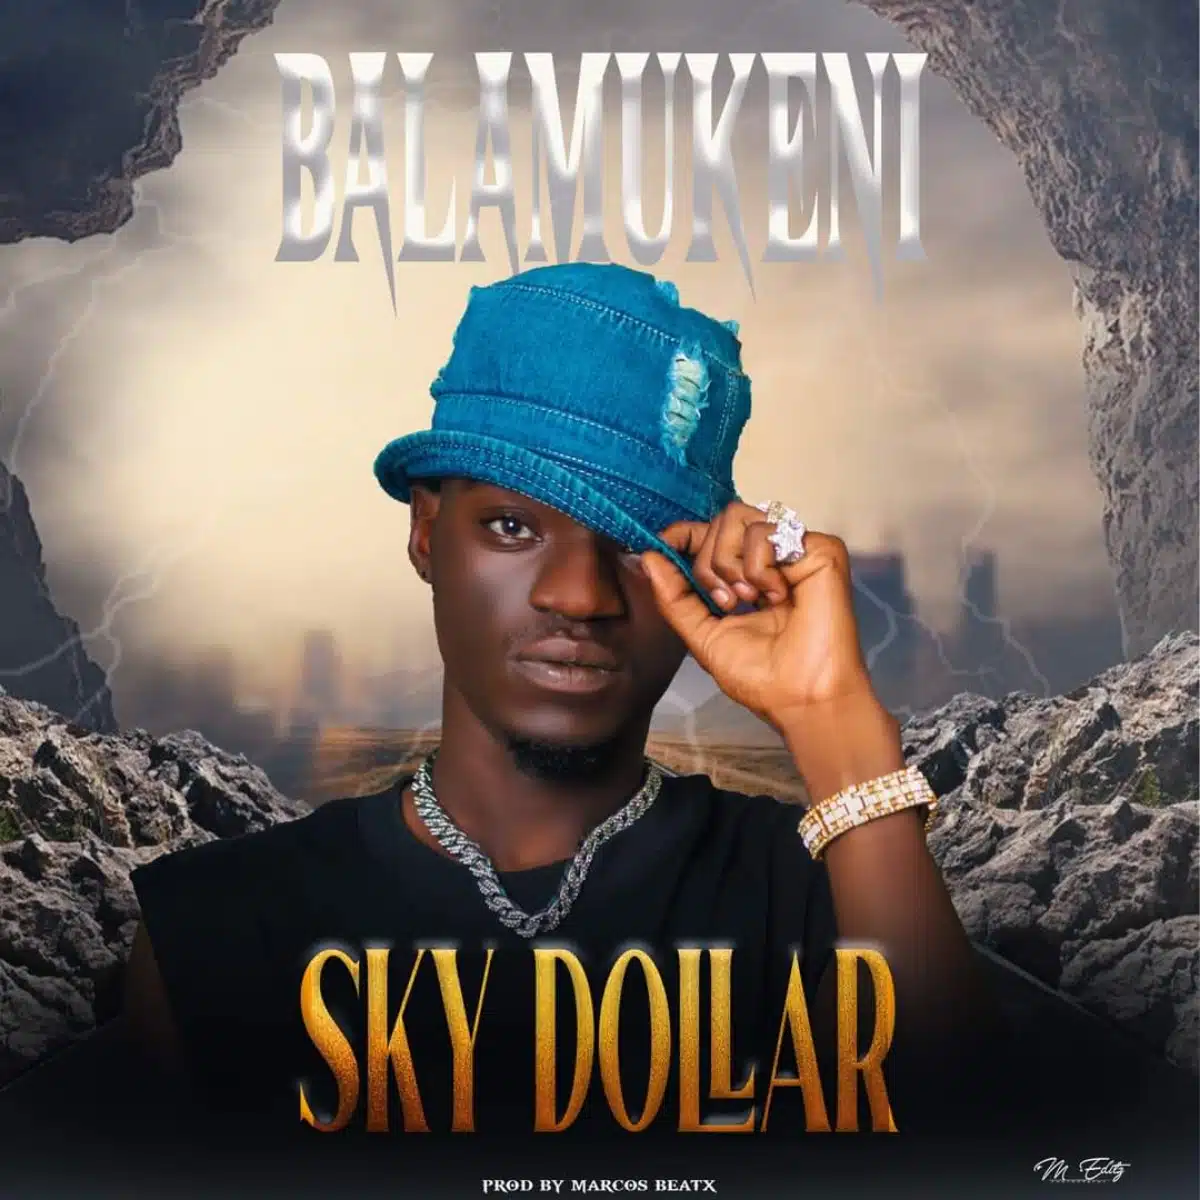 DOWNLOAD: Sky Dollar – “Balamukeni” (Video & Audio) Mp3